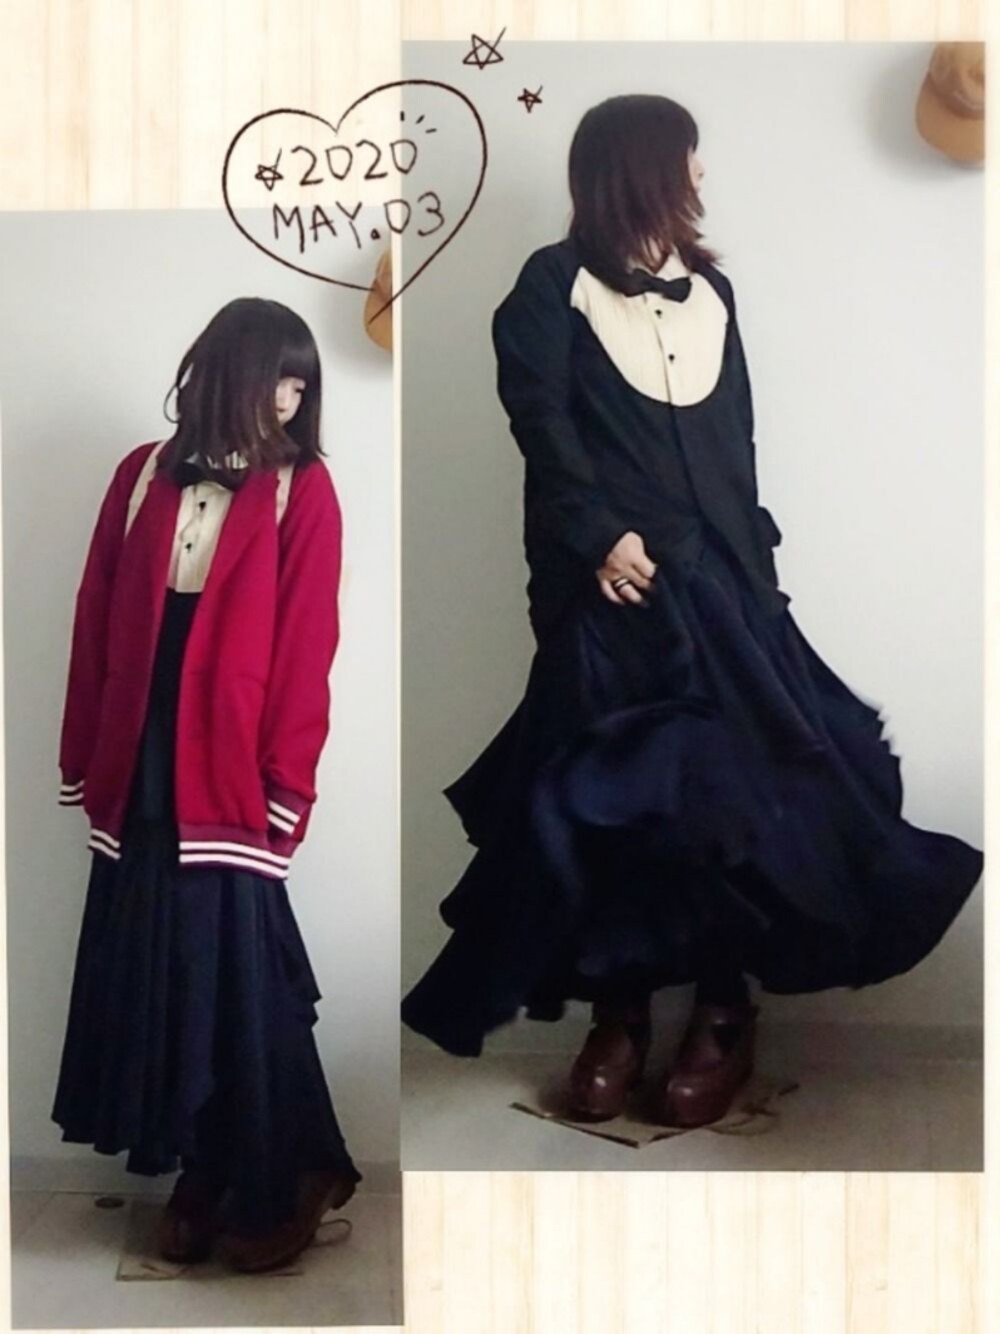 hazama さんざめくスカート - ロングスカート